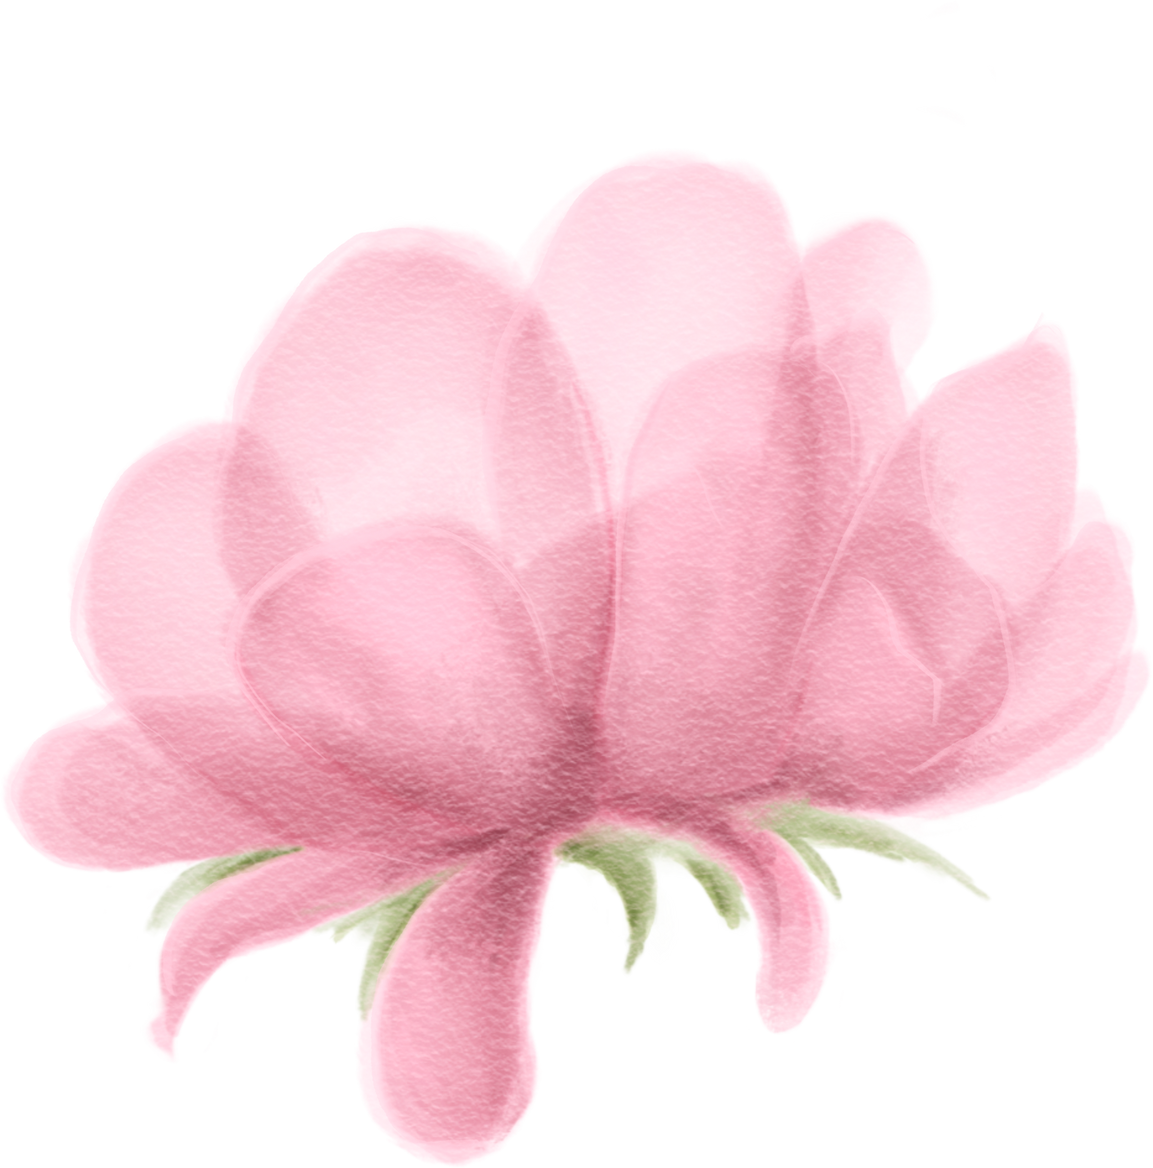 Watercolor pink flower